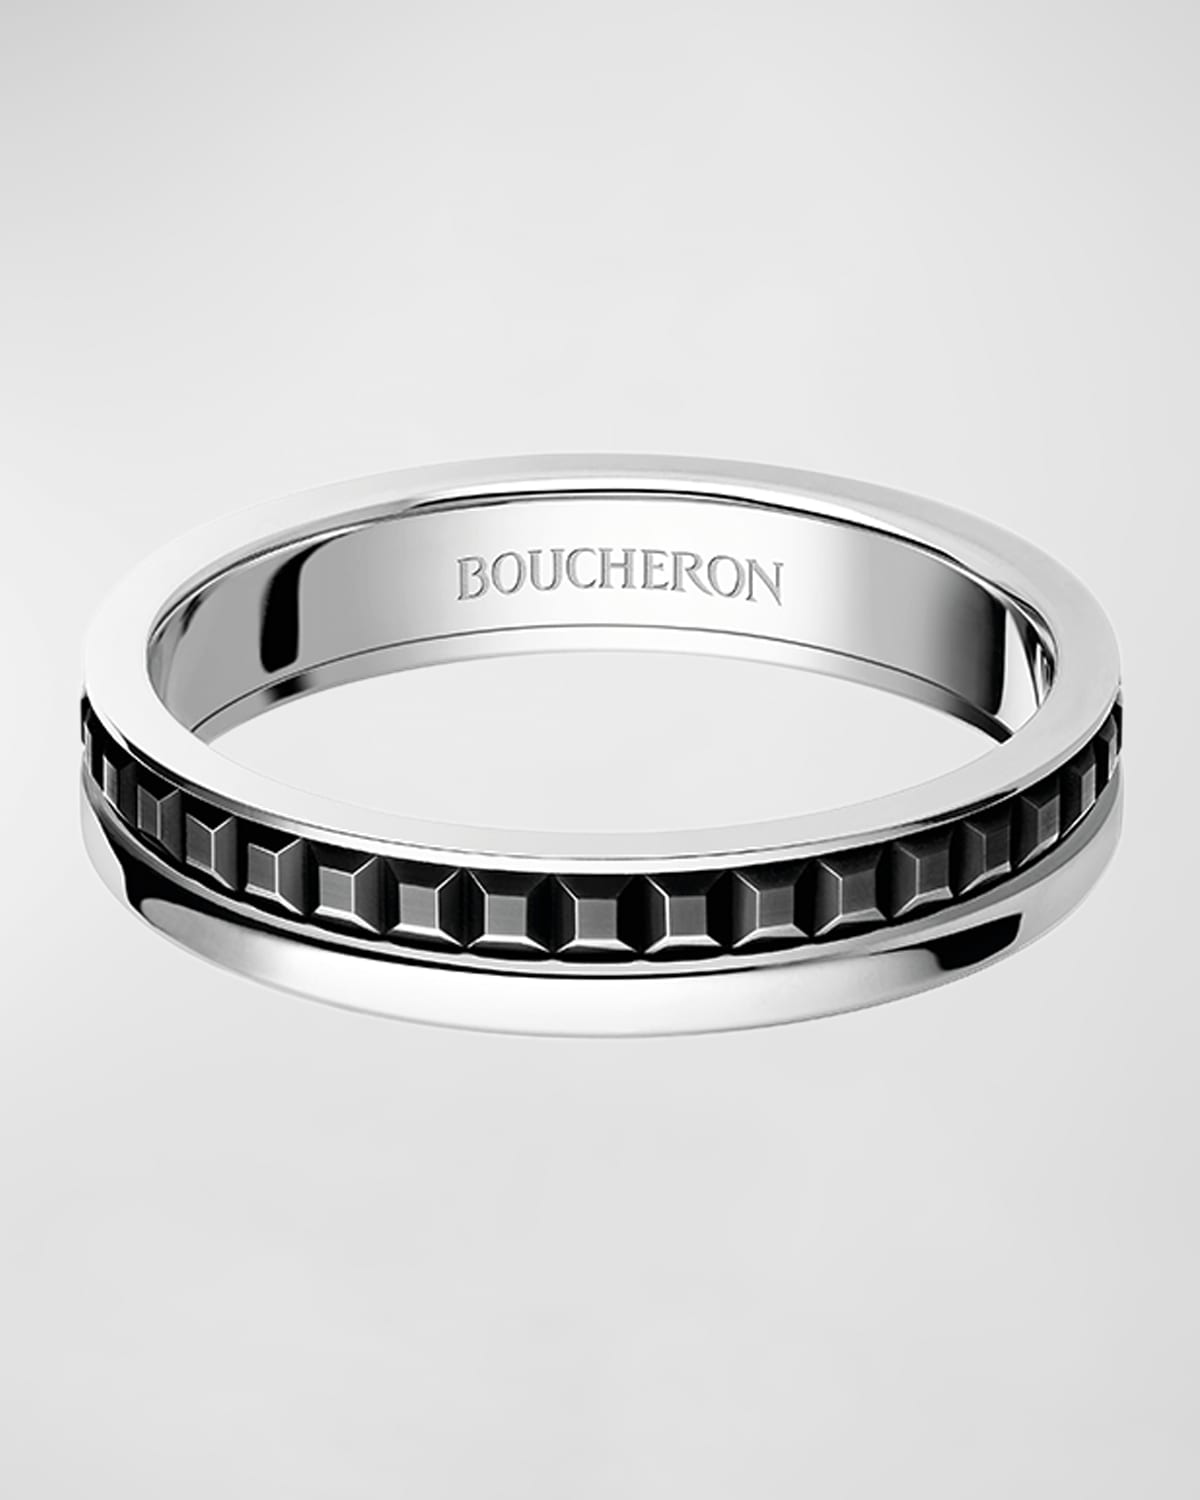 Boucheron Black PVD and White Gold Quatre Follies Ring, Size 62